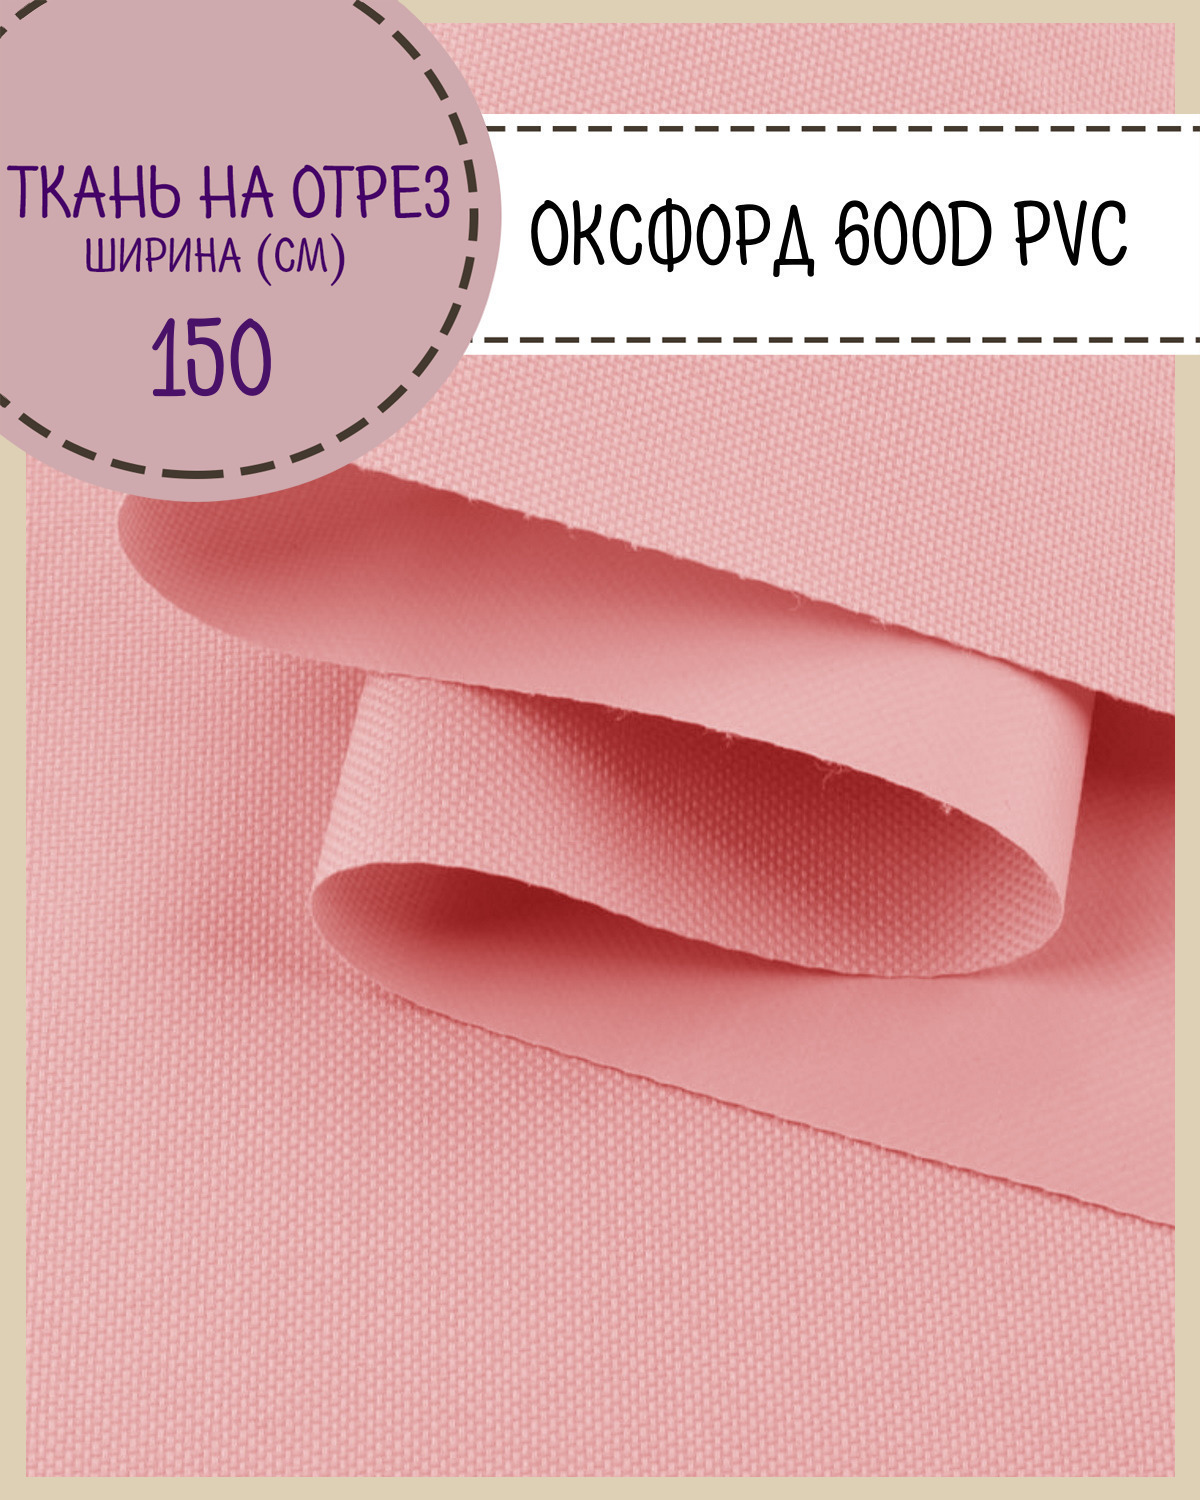 Ткань Оксфорд Любодом 600D PVC водоотталкивающая, цв. св.розовый , на отрез, 150х100 см